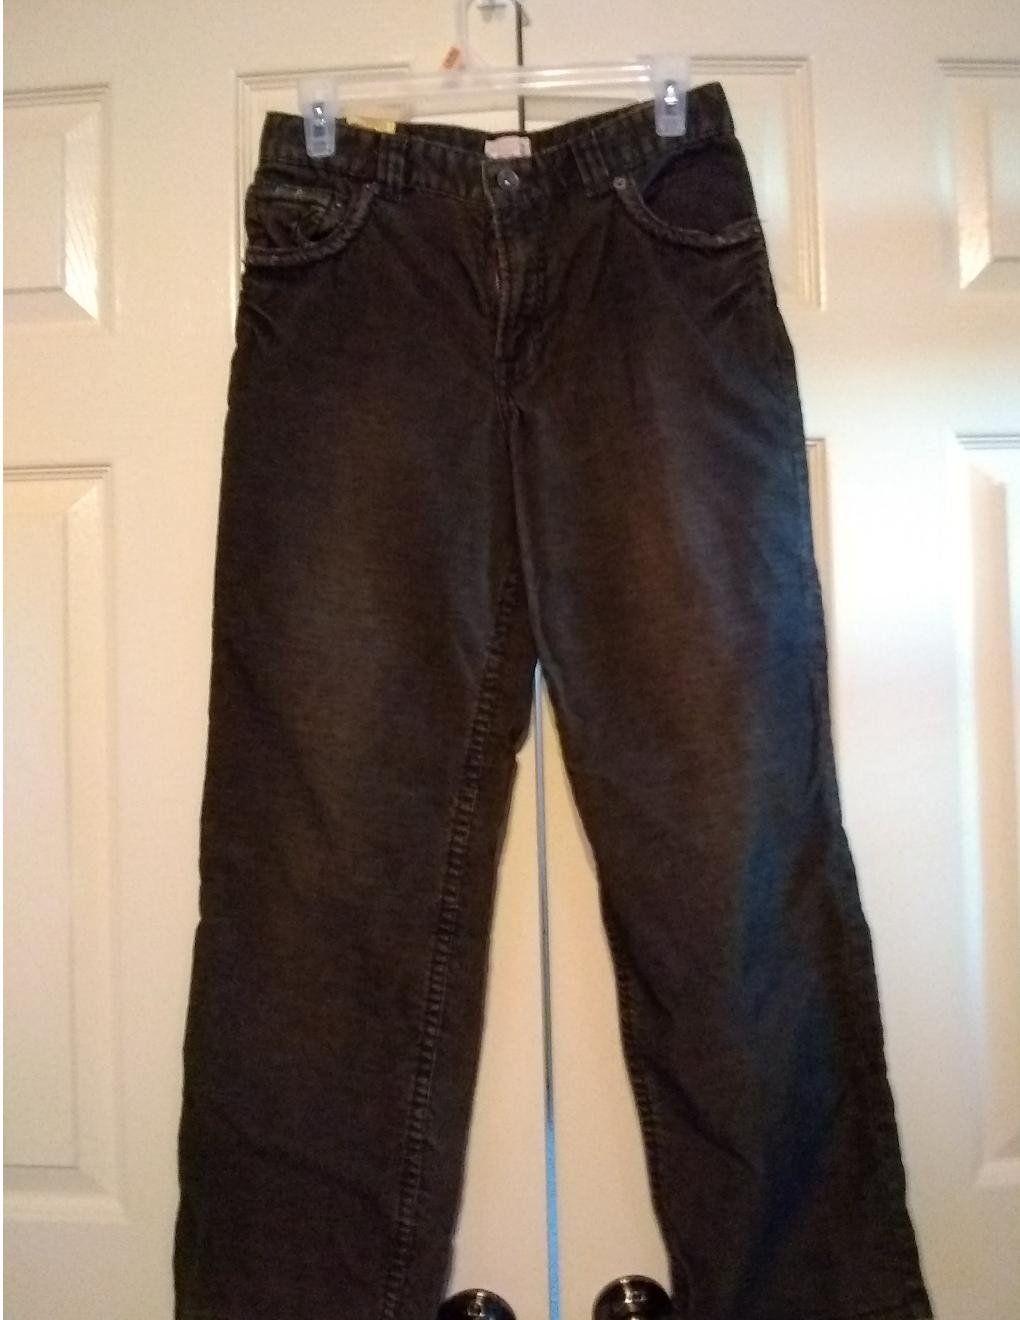 Mossimo Brand Adjustable Waist Corduroy Pants Boys Size 14 in Brown NEW